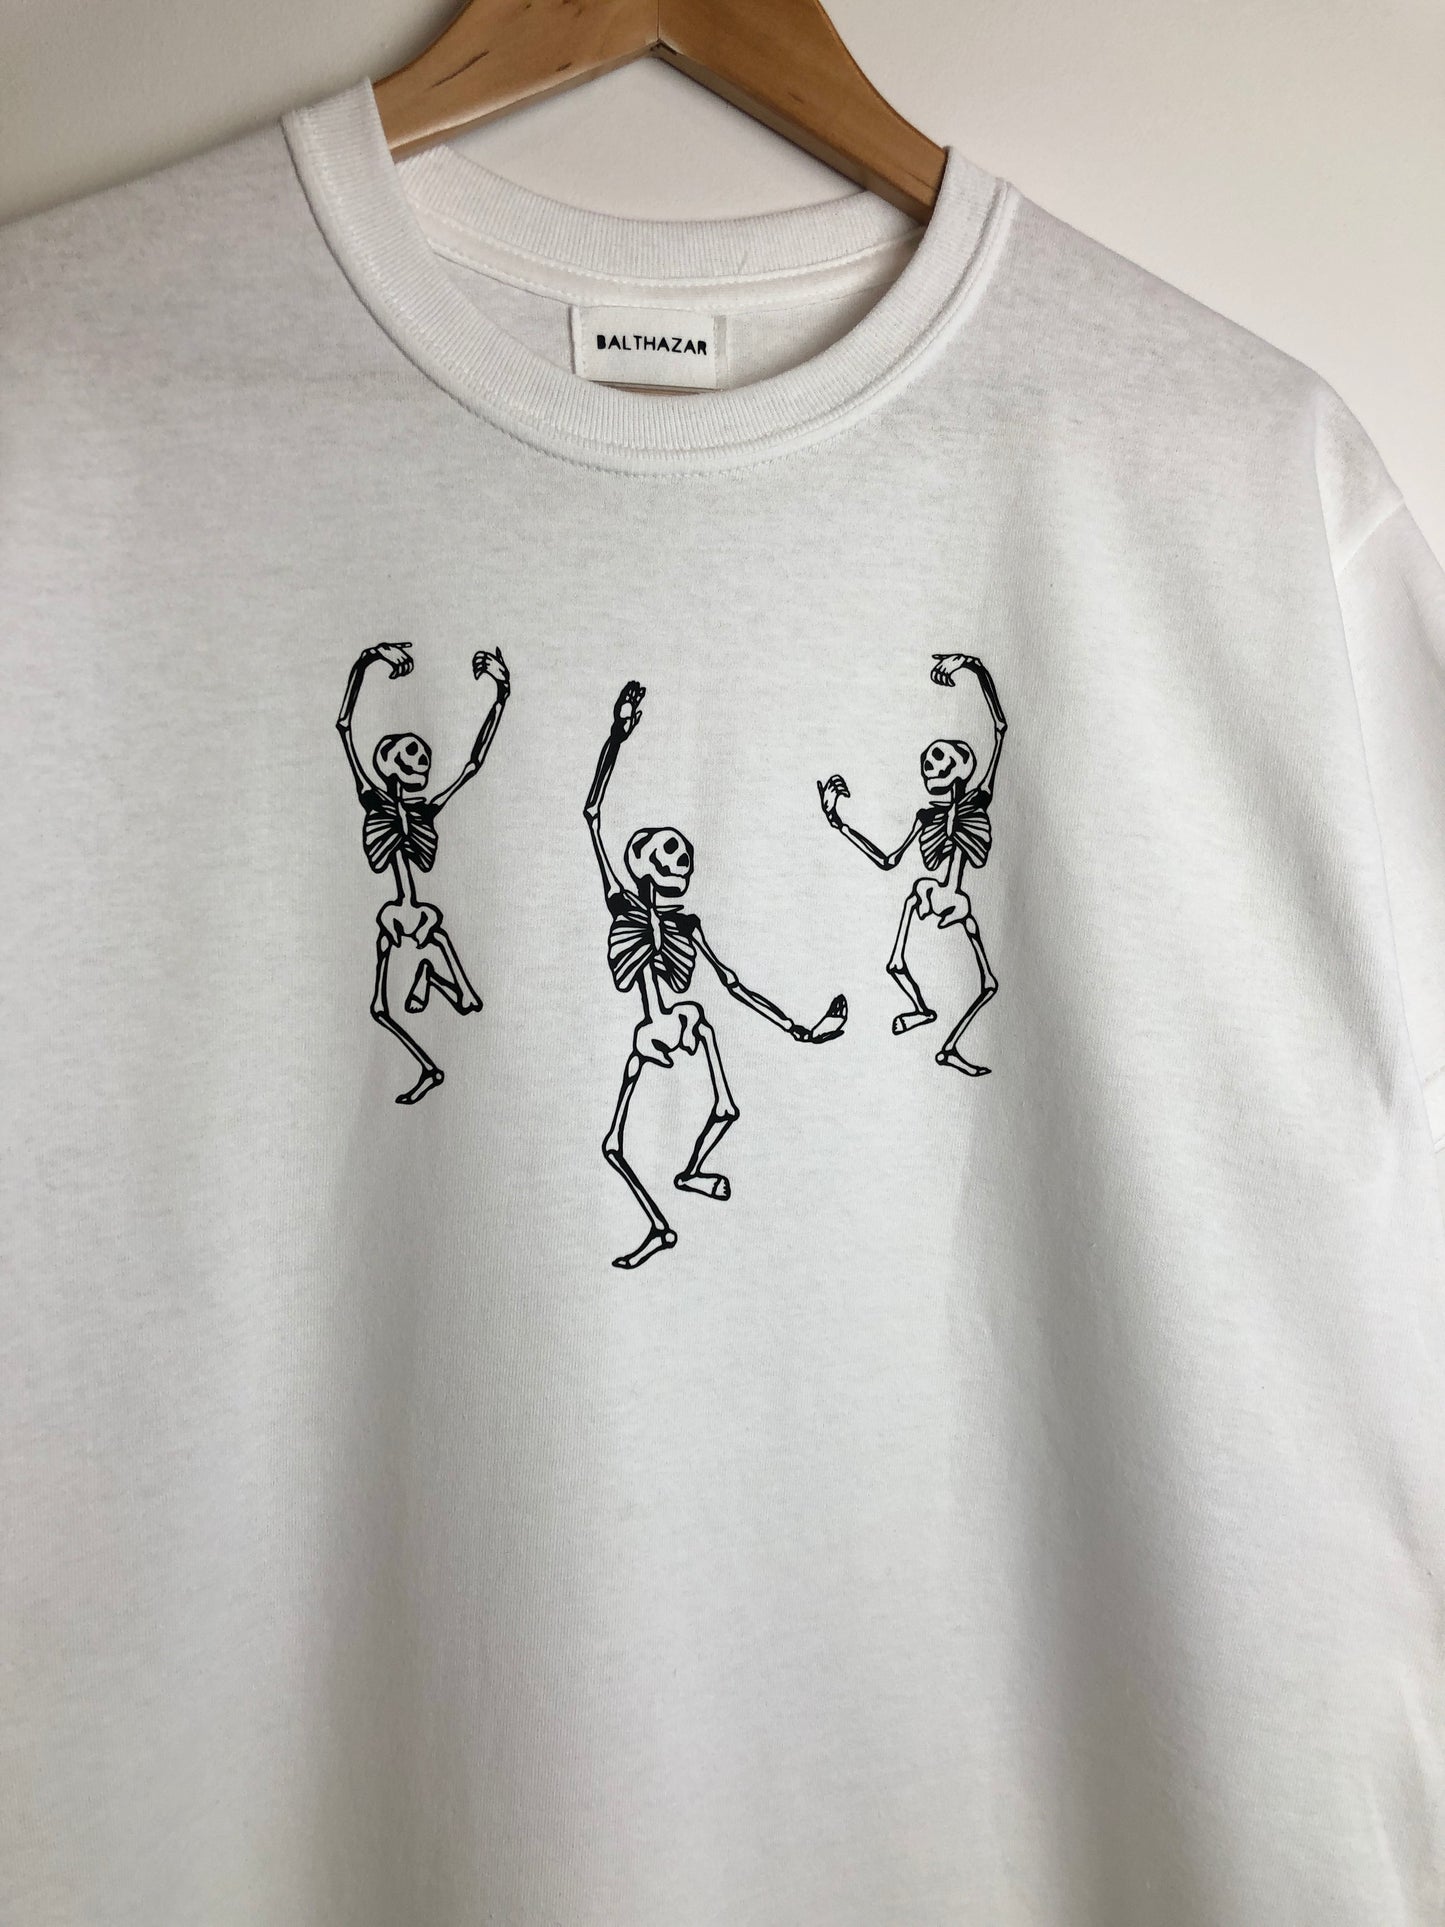 Dancing skeleton trio t-shirt